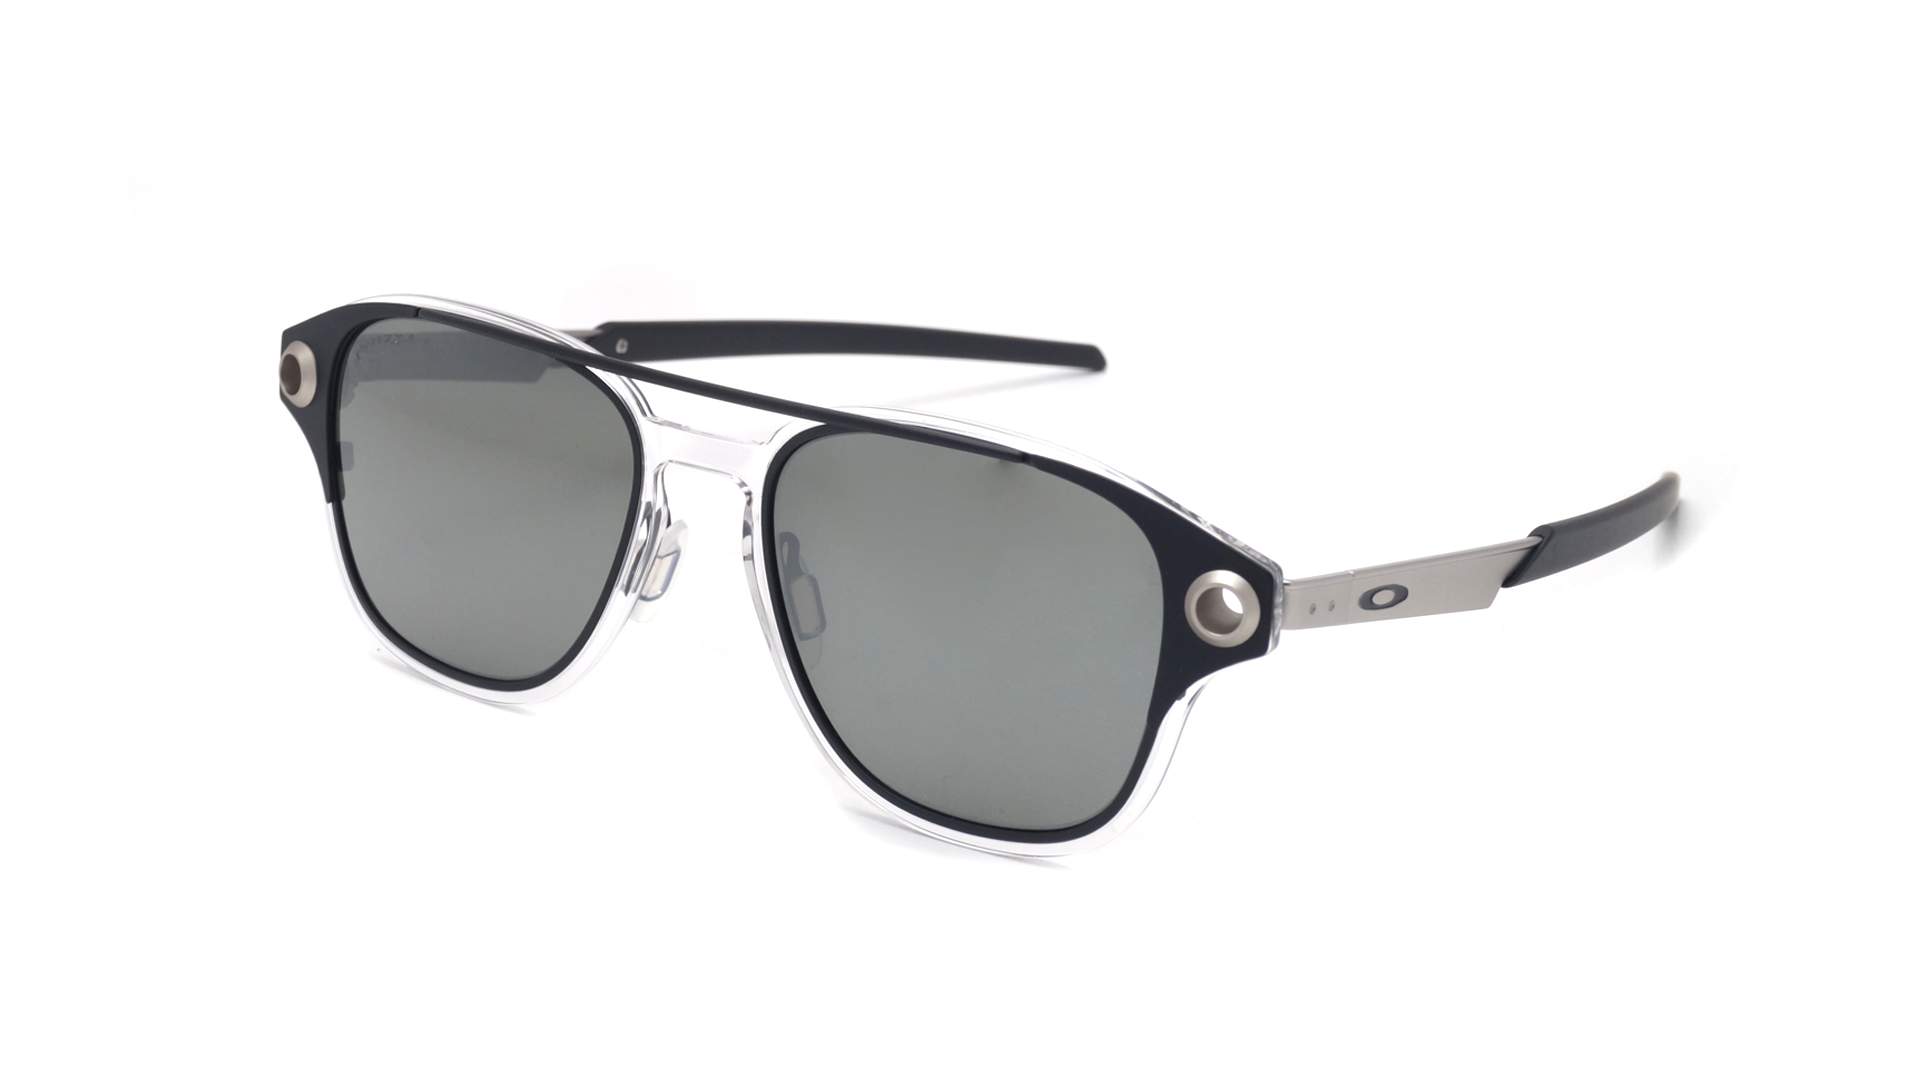 oakley titanium frame sunglasses